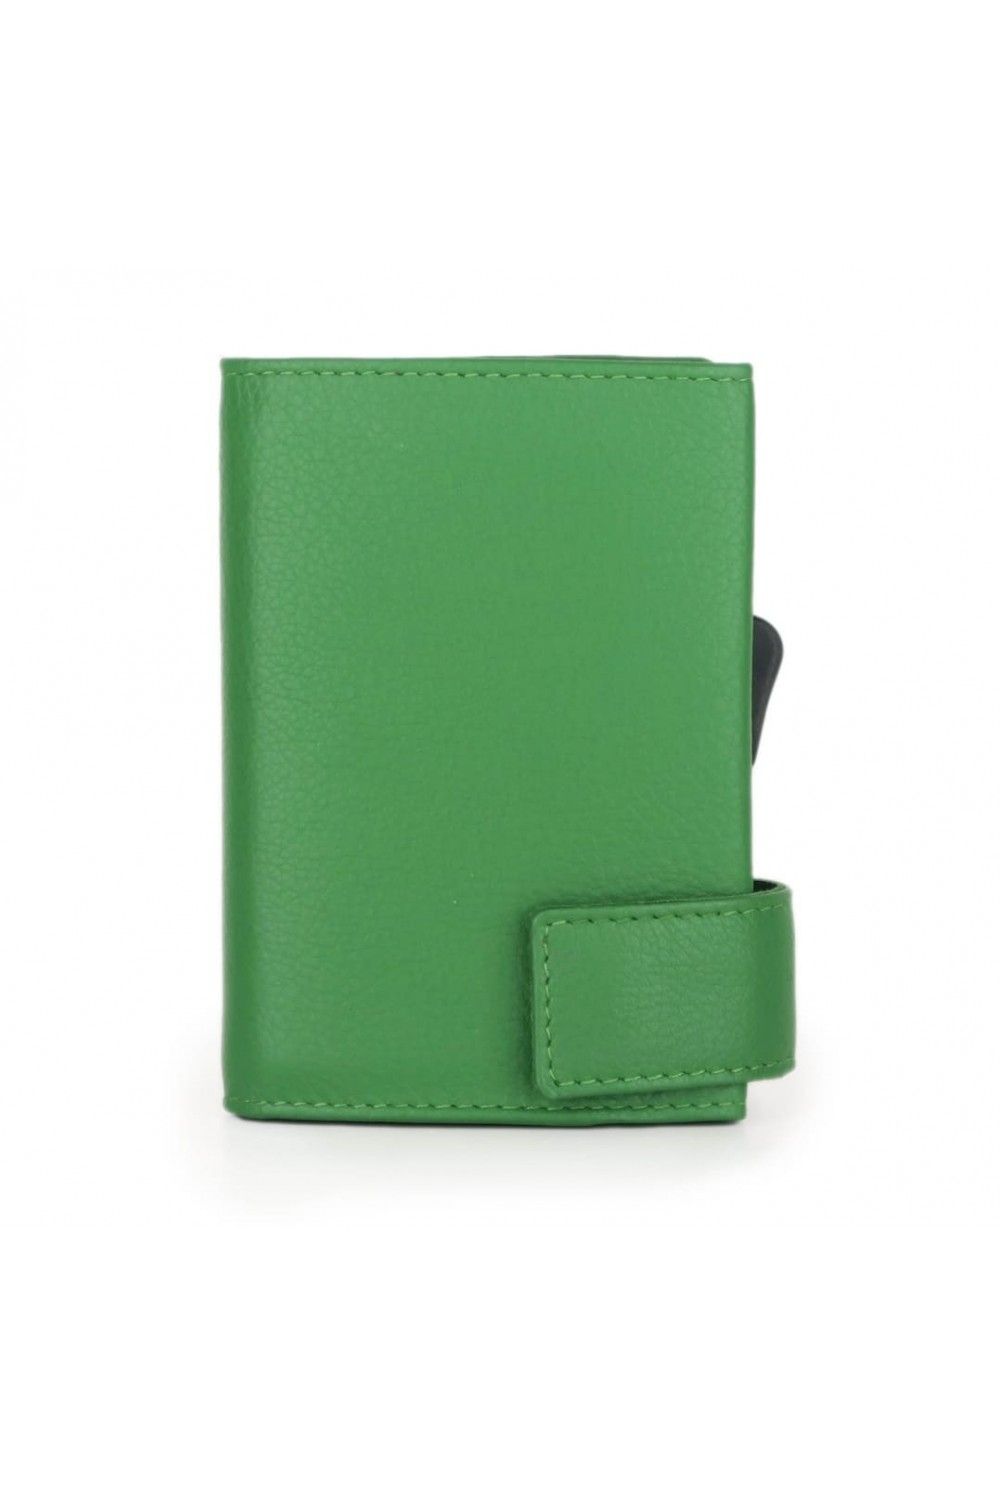 Porte-cartes SecWal DK Leather Vert fonce